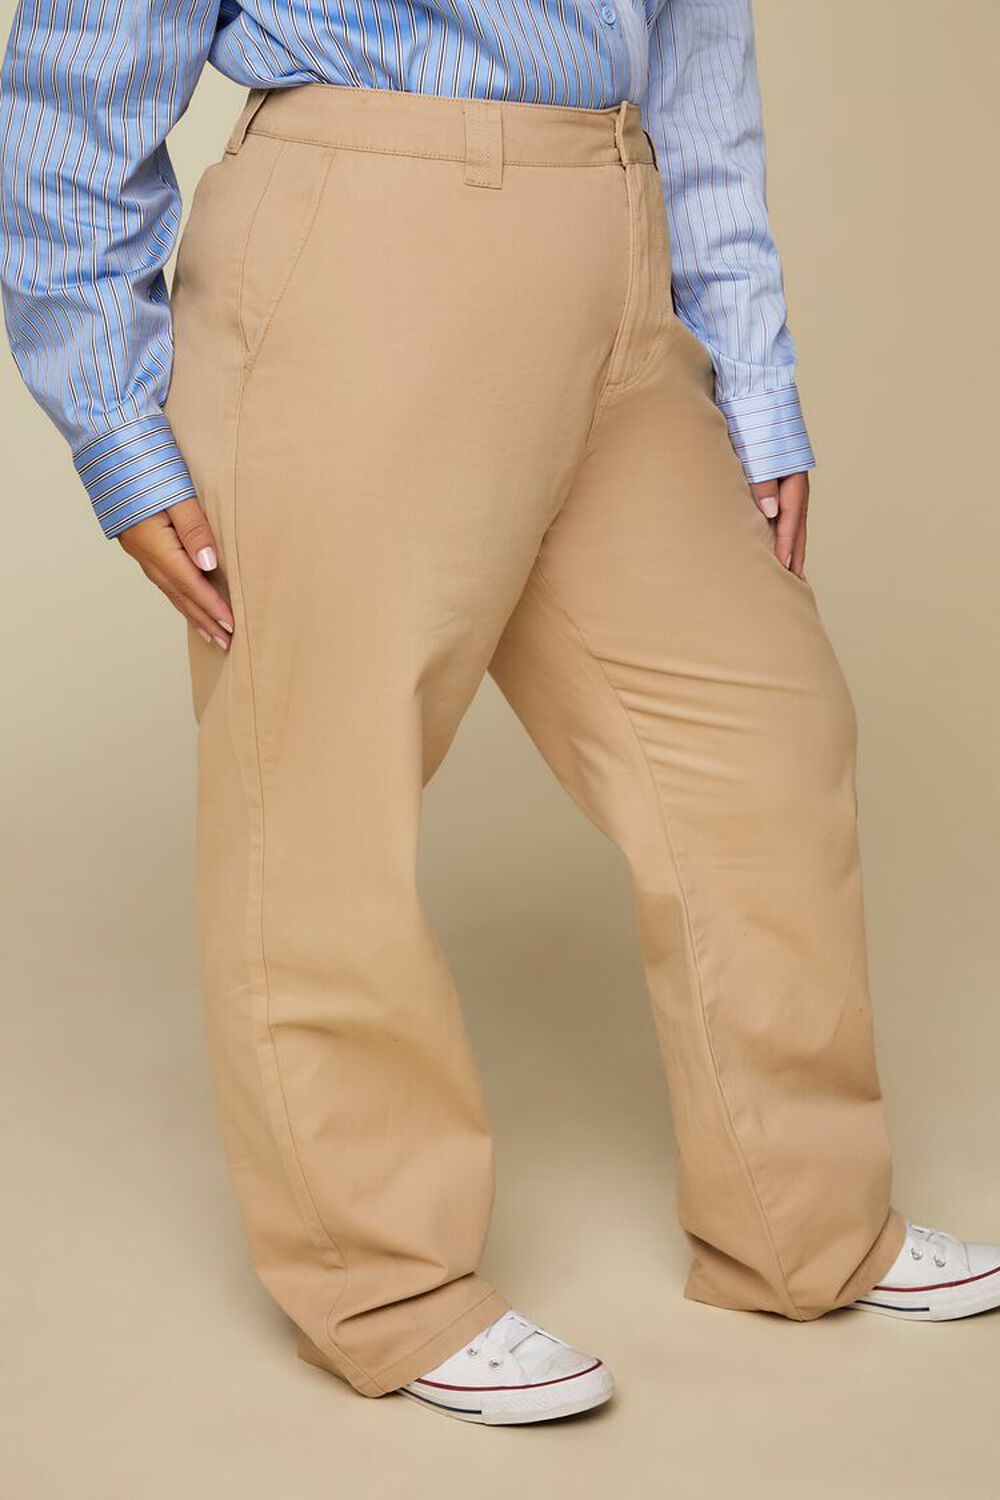 PINE BARK Plus Size Wide-Leg Pants, image 3